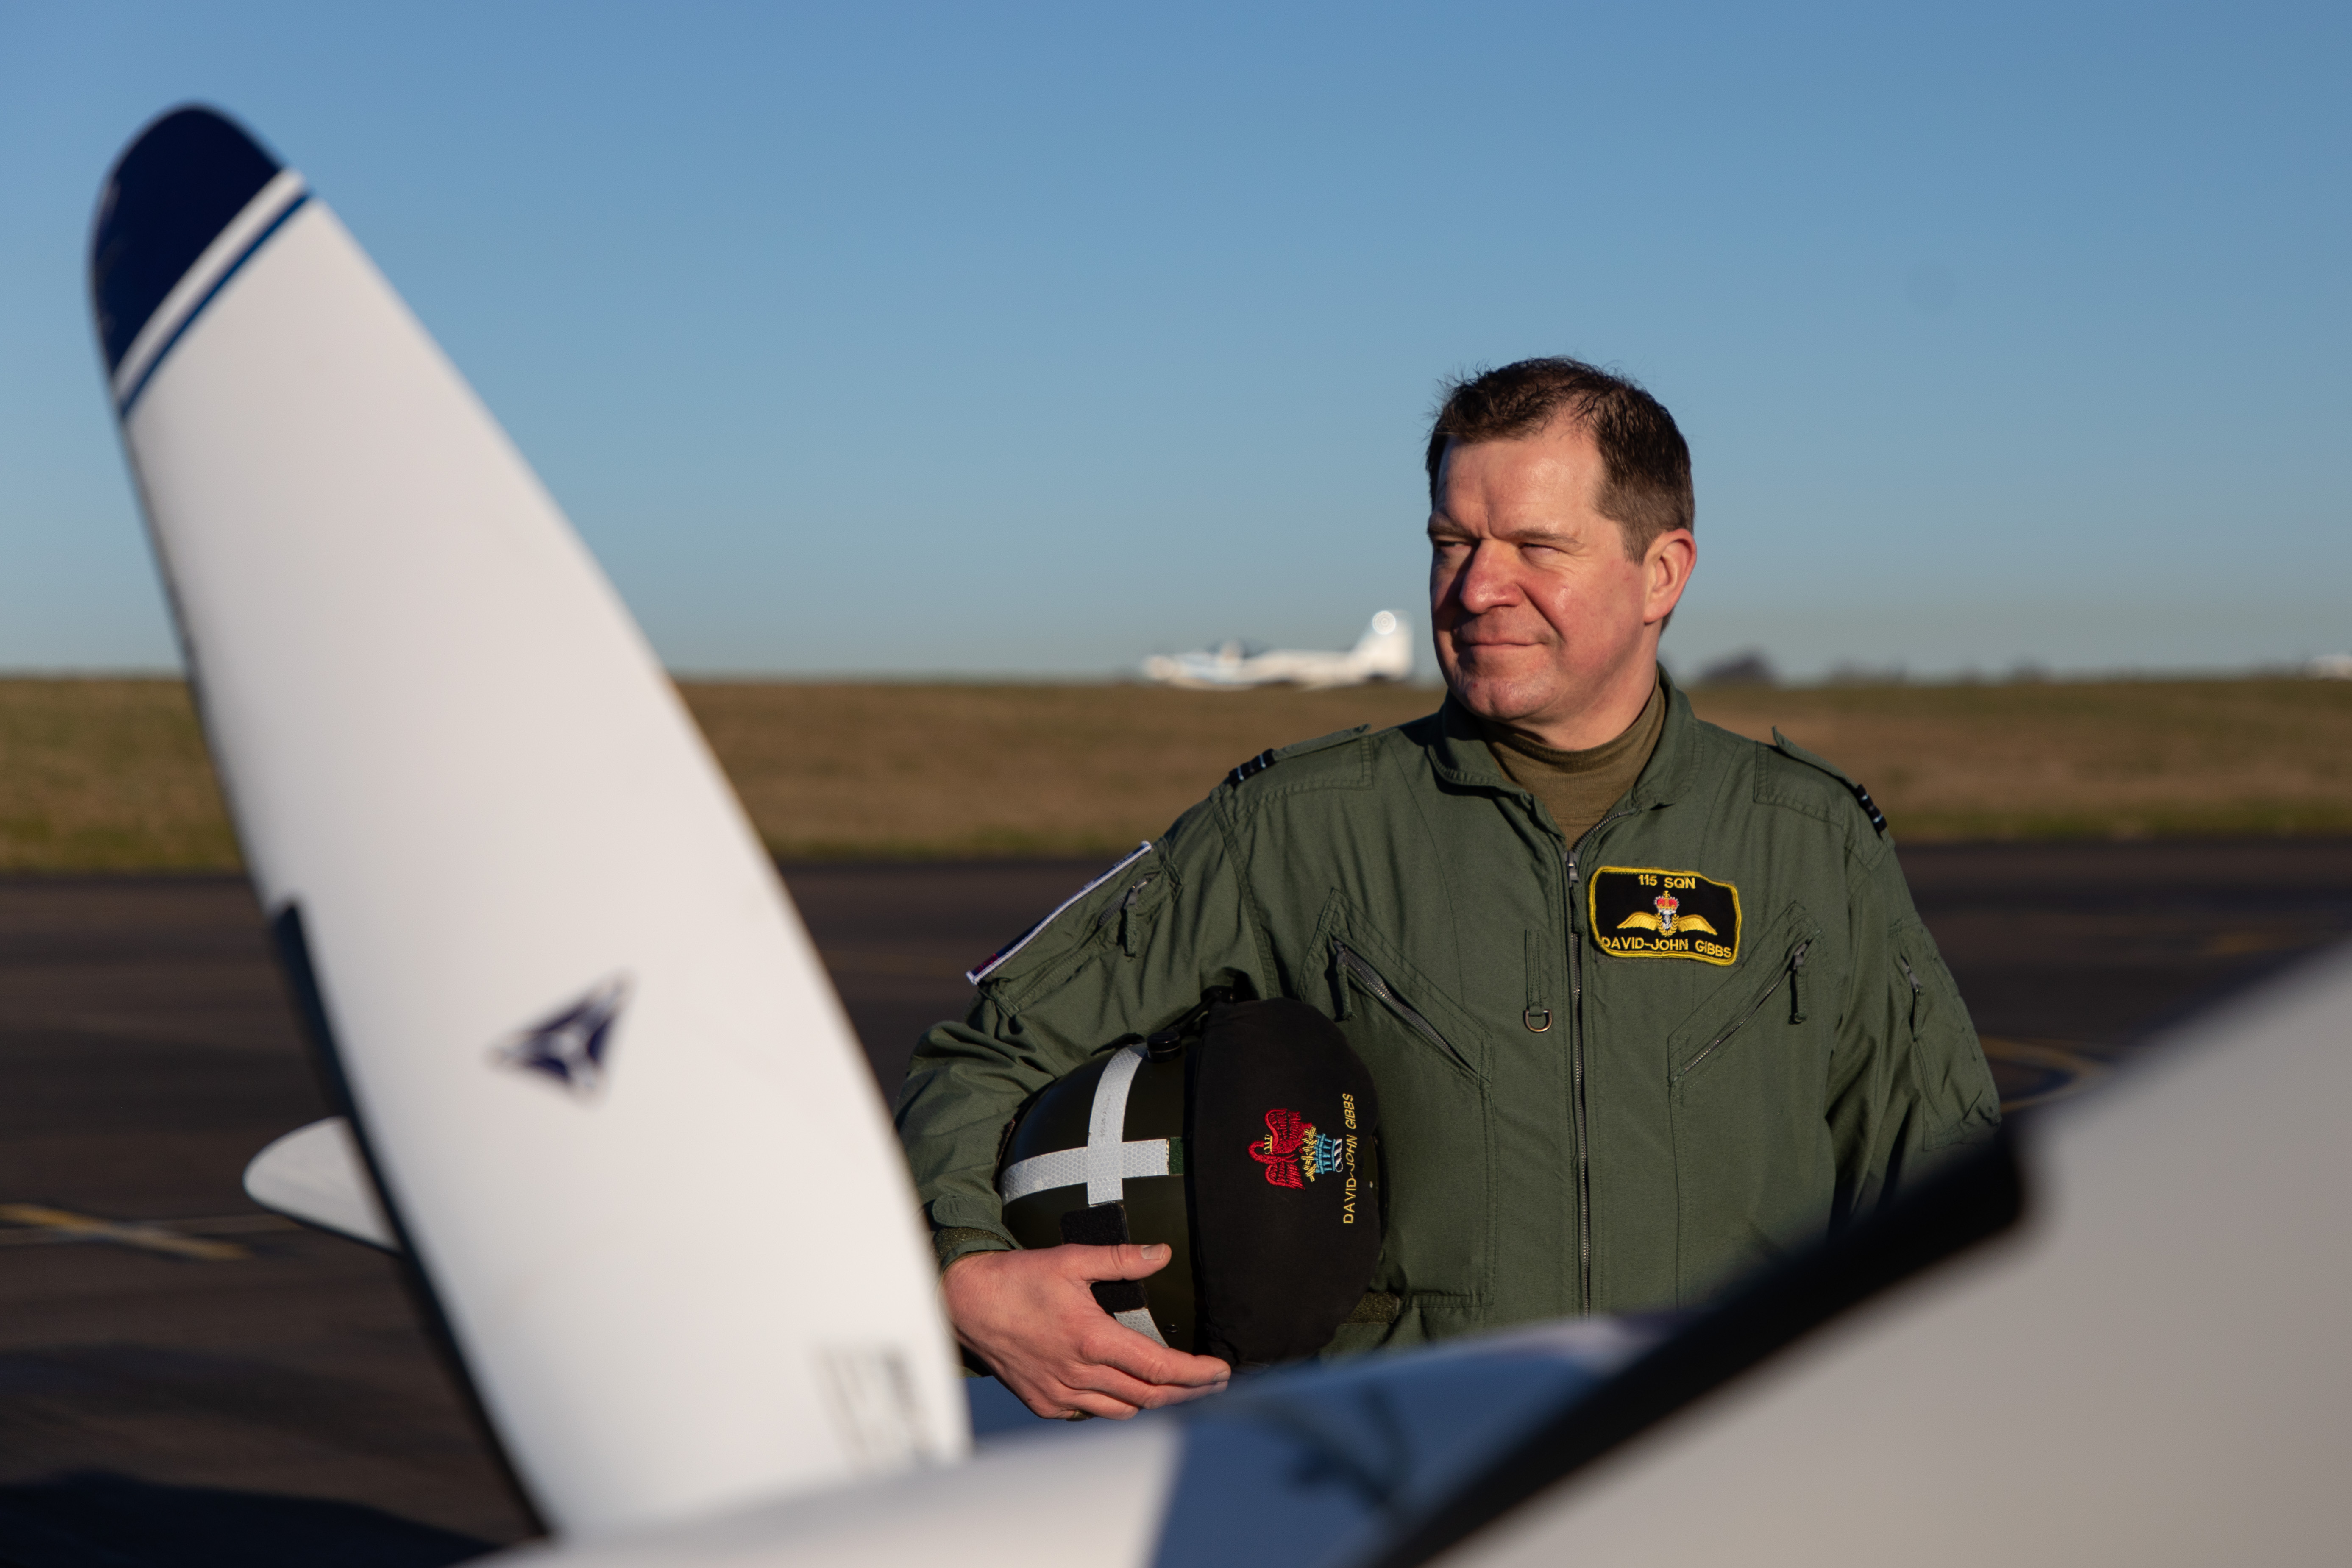 The RAF Tutor Display Pilot Flight Lieutenant David-John Gibbs